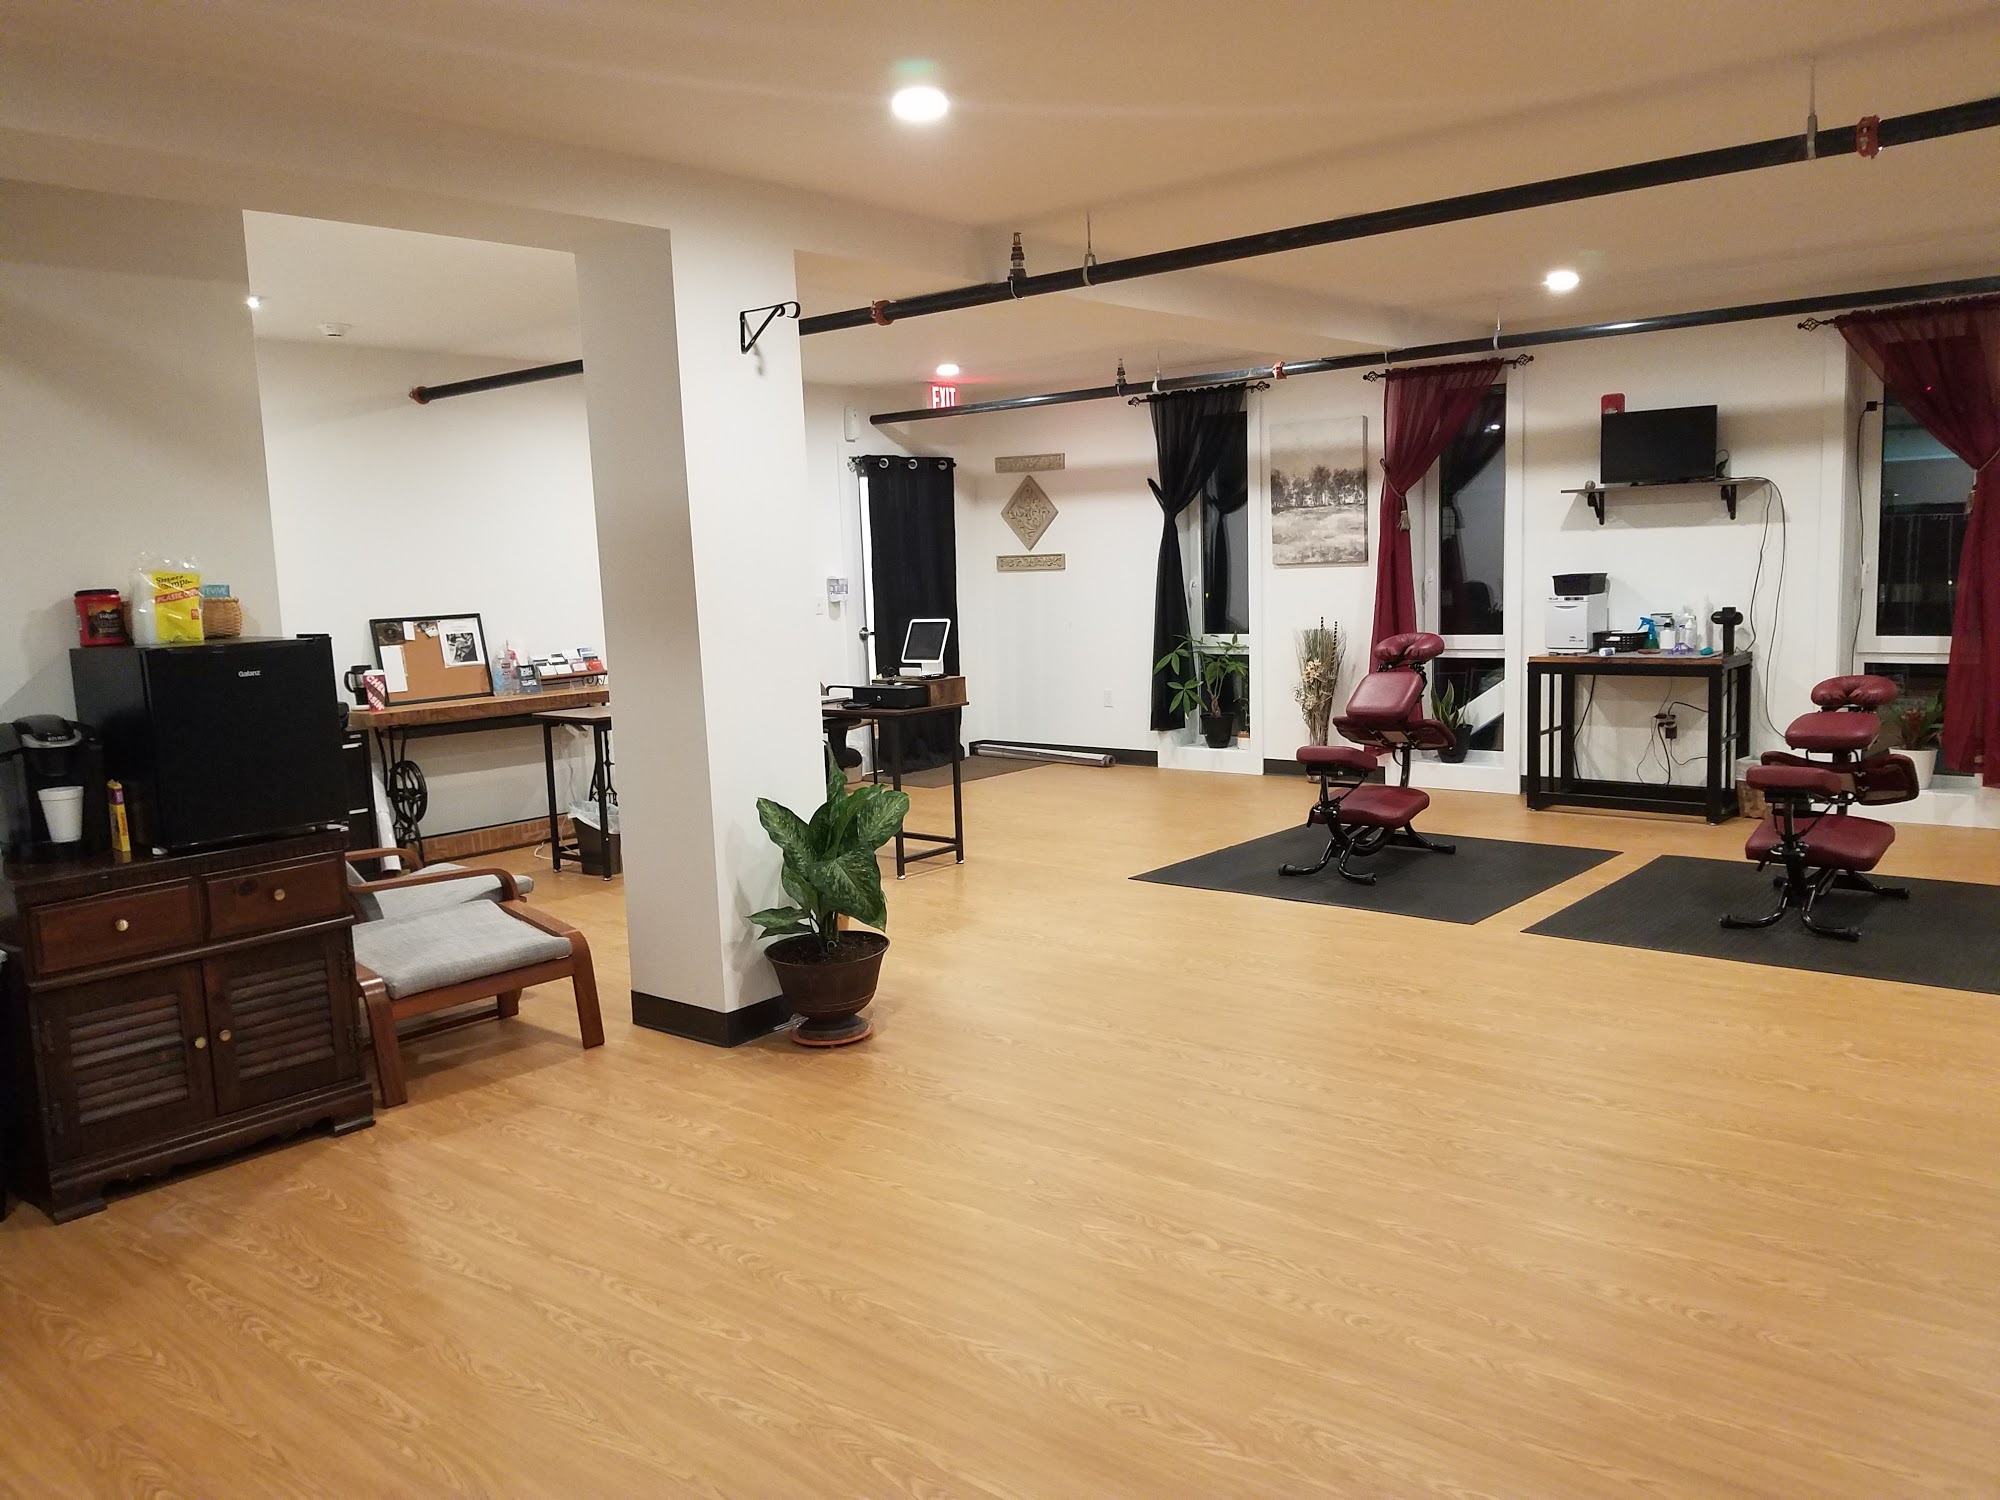 The Chair Massage Studio